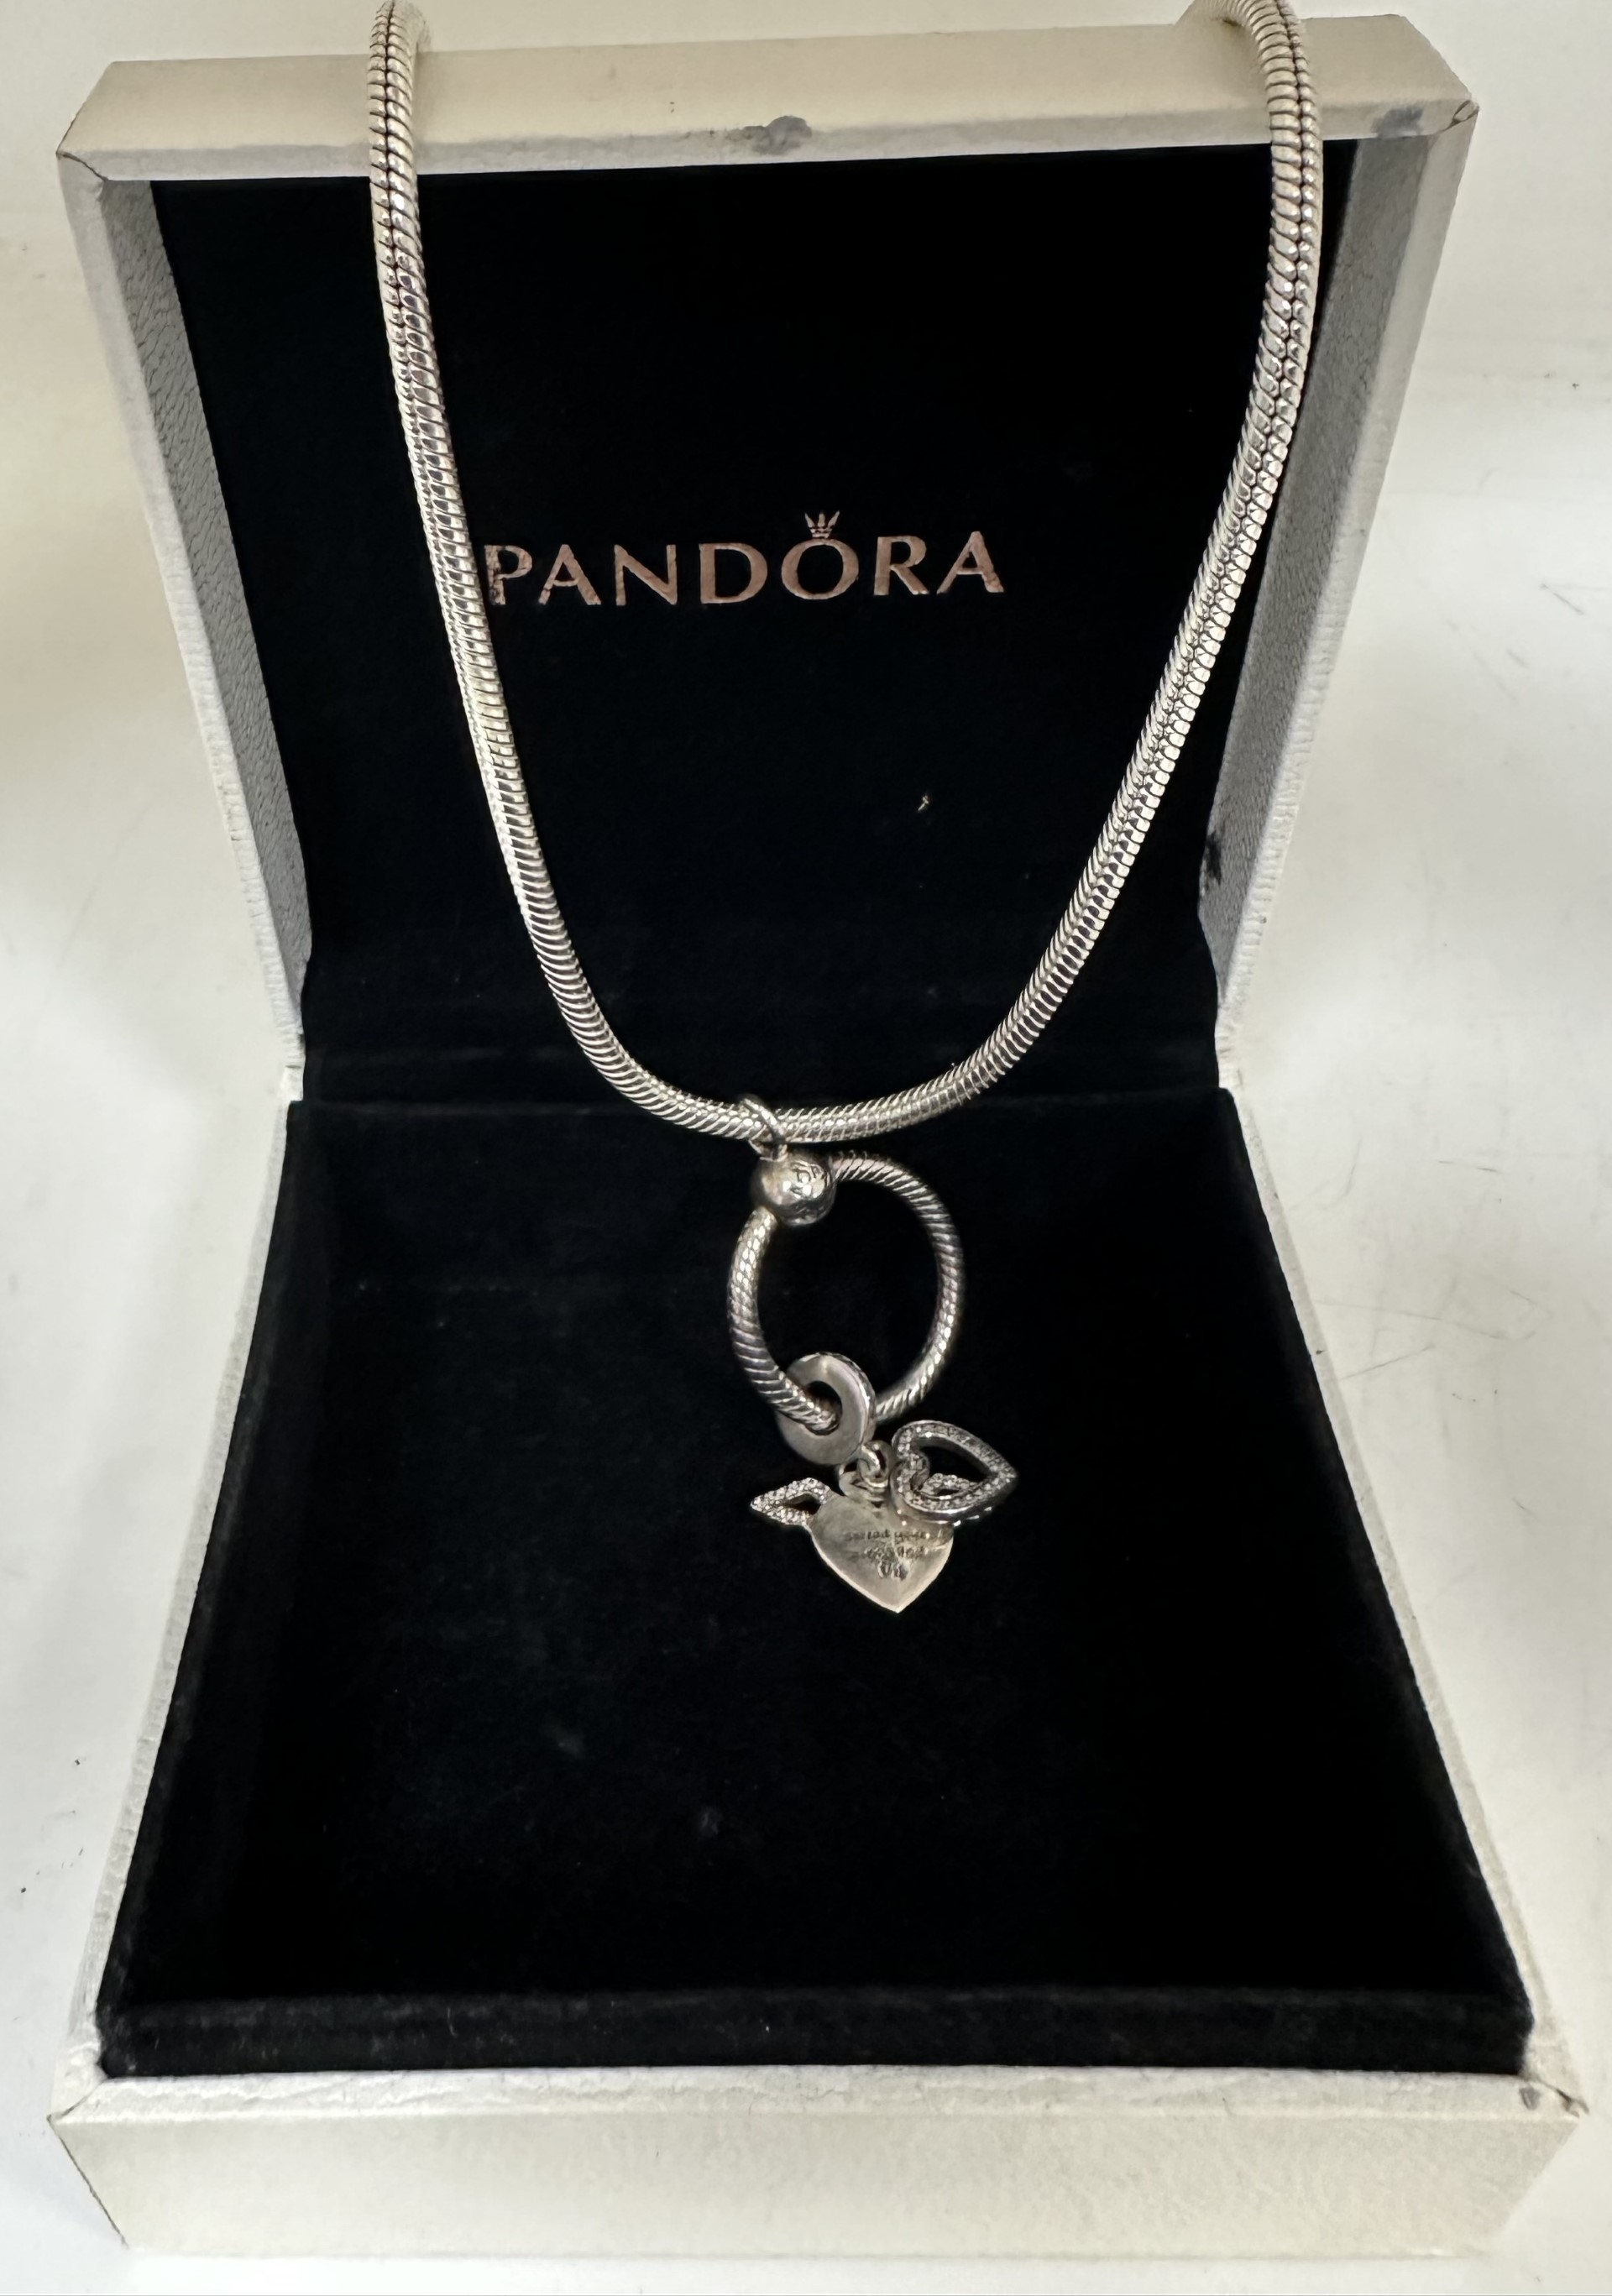 Pandora Necklace With Charm & Box